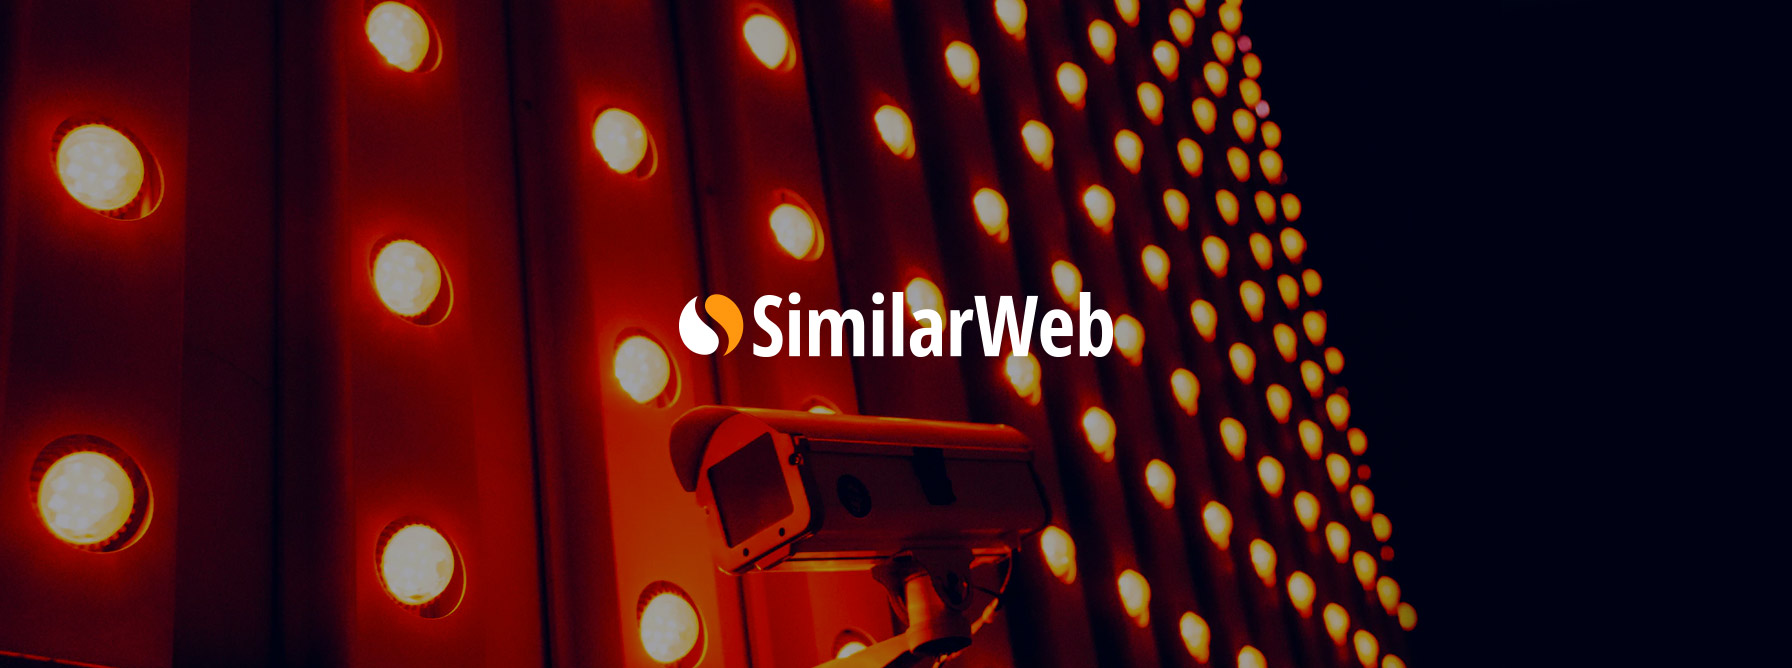 SimilarWeb Spy on your competitors data